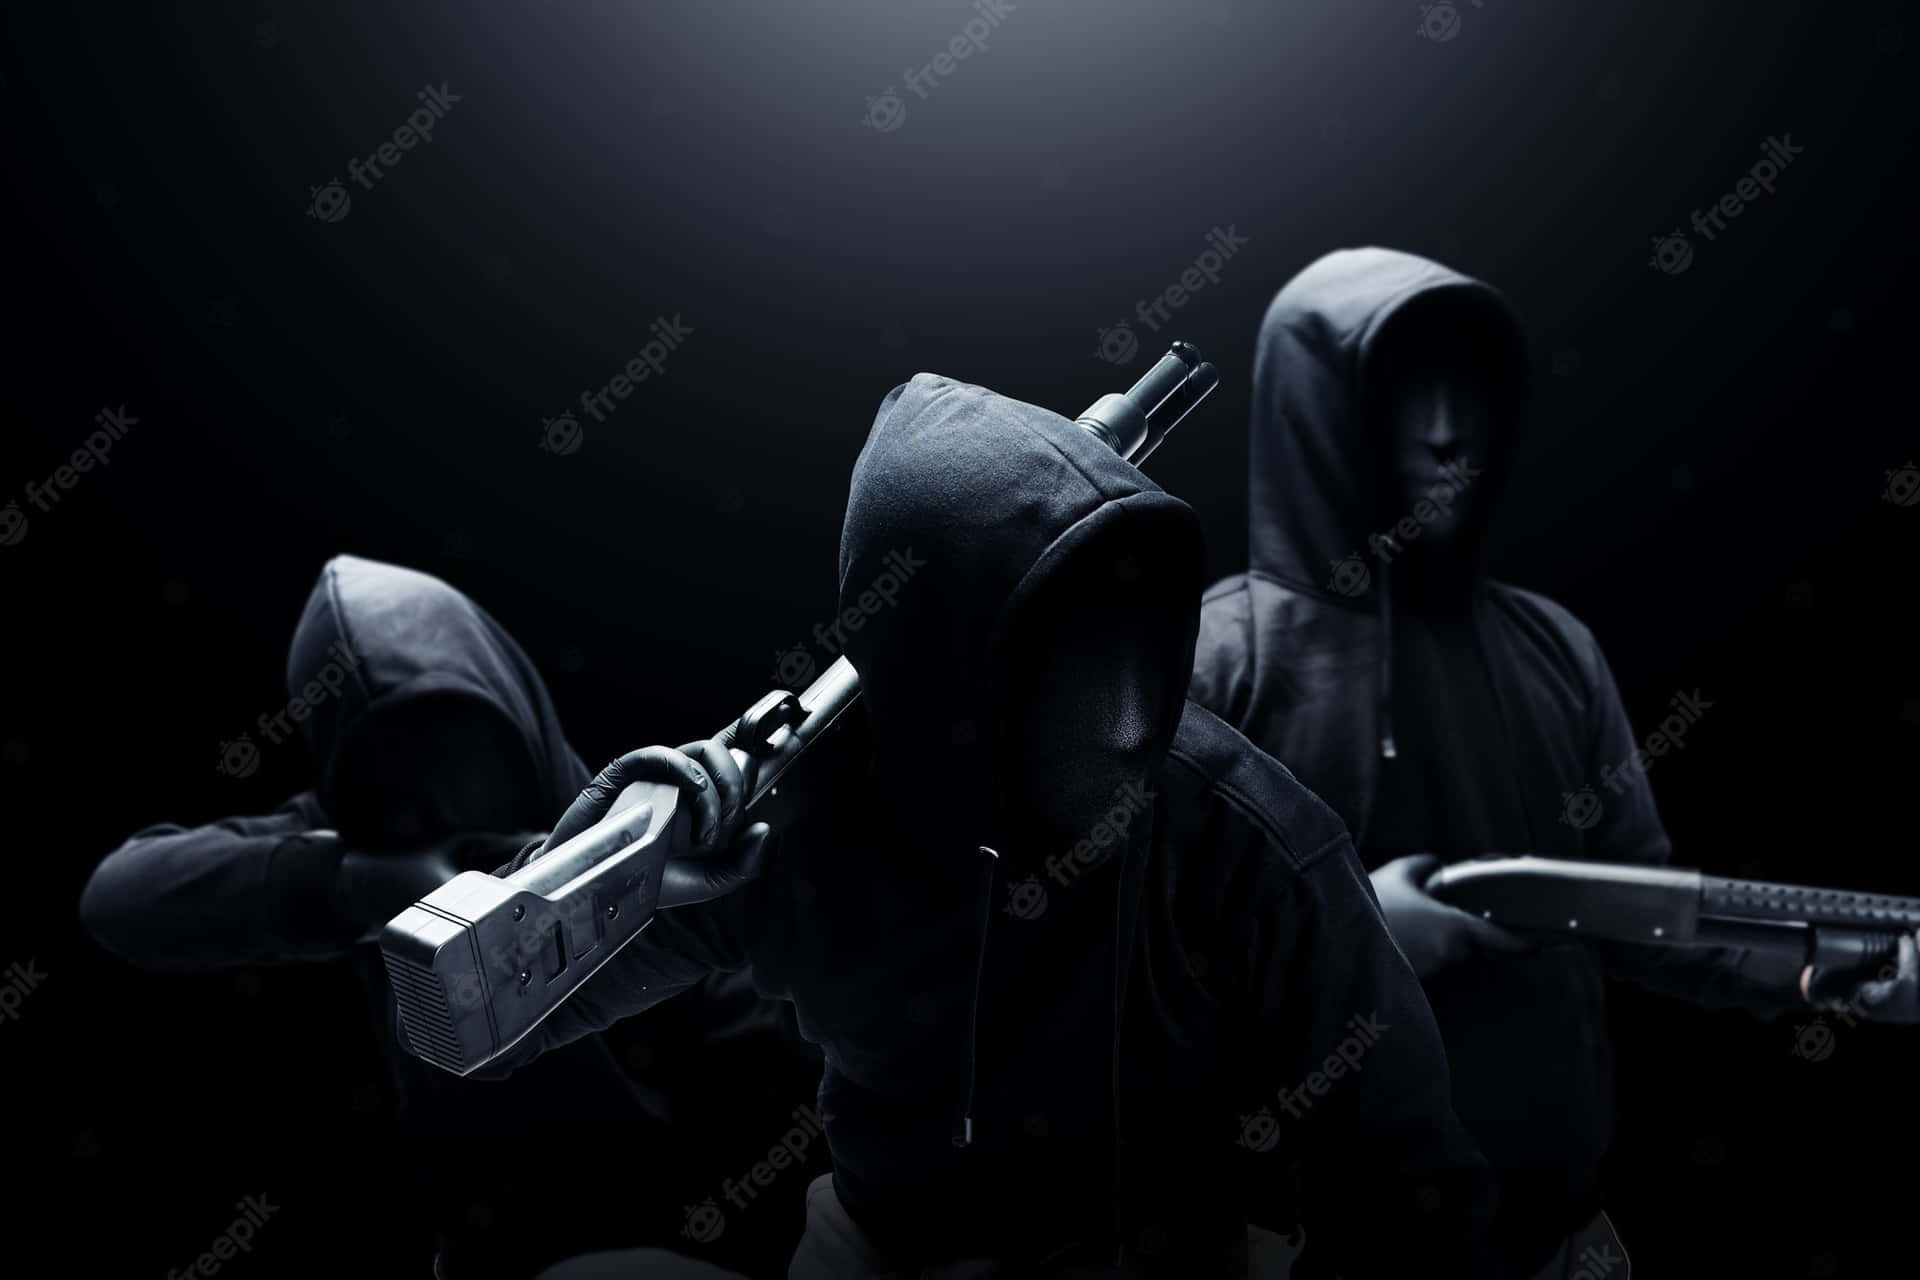 Three Hooded Men With Guns On A Dark Background Wallpaper